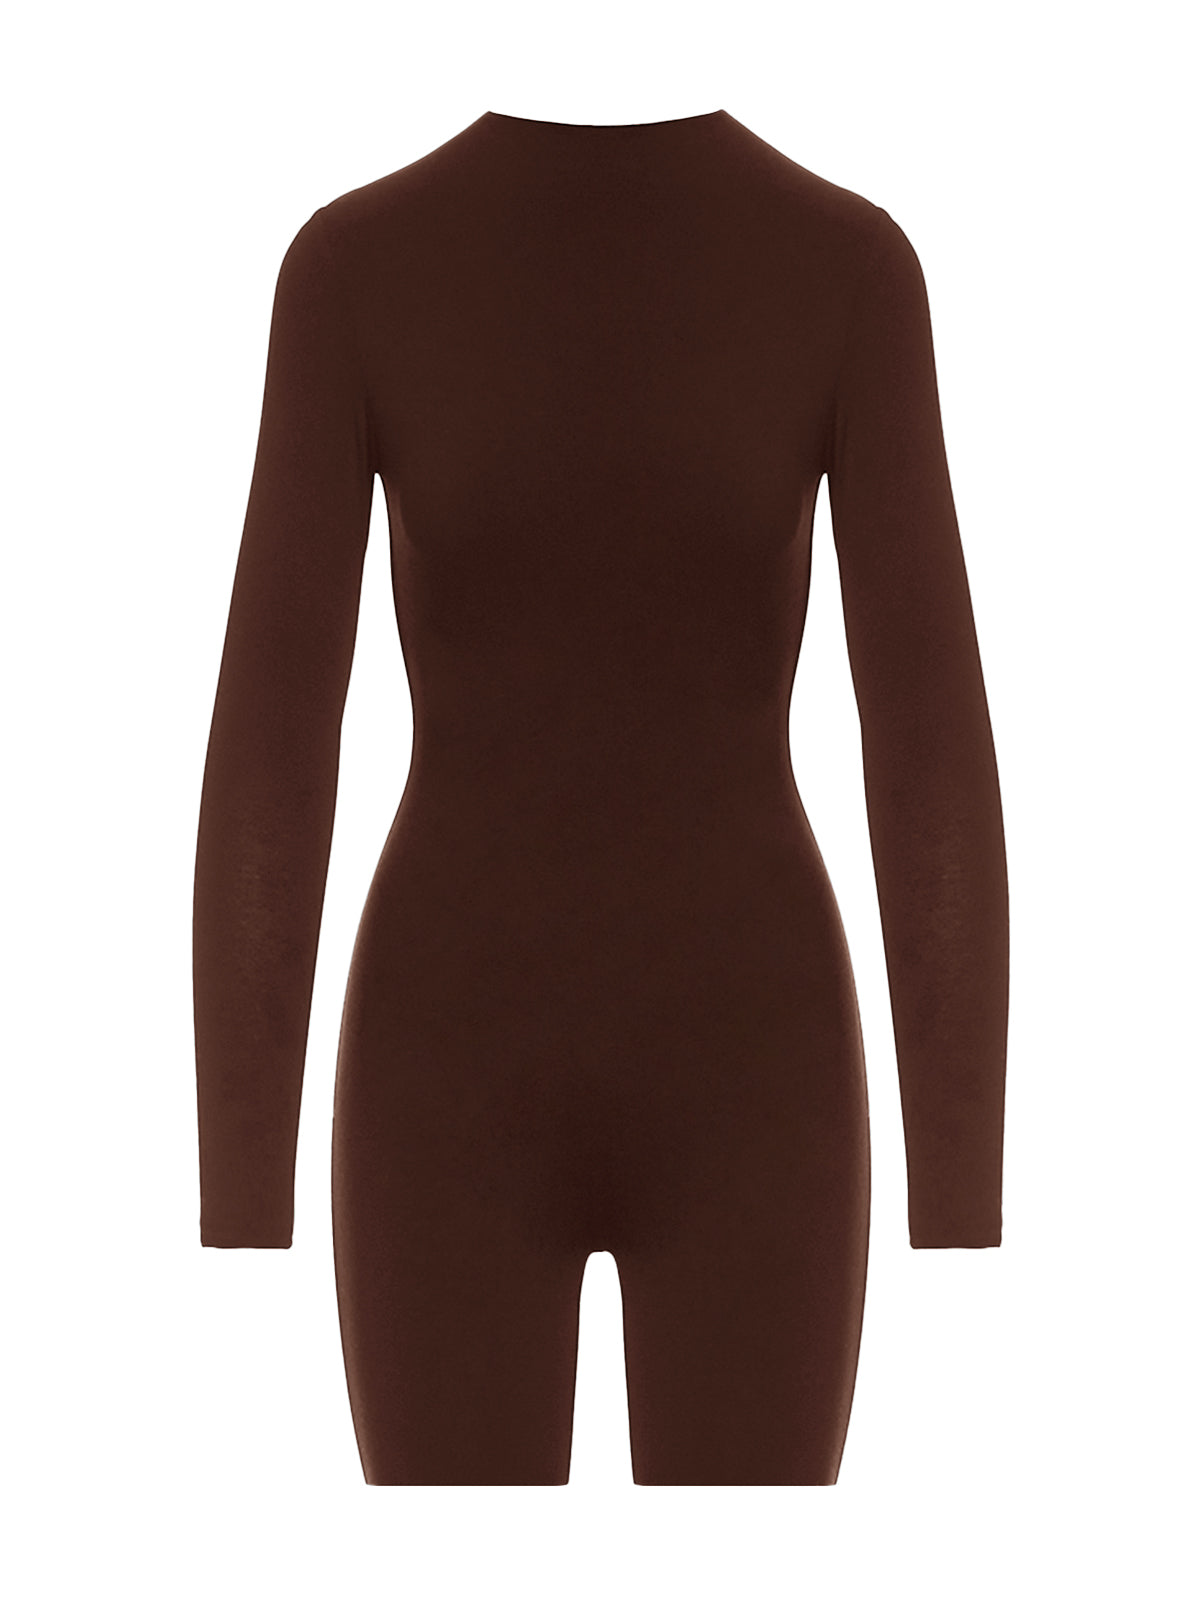 Naked Wardrobe BROWN Women's Long Sleeve Key Hole Jumpsuit, US L 